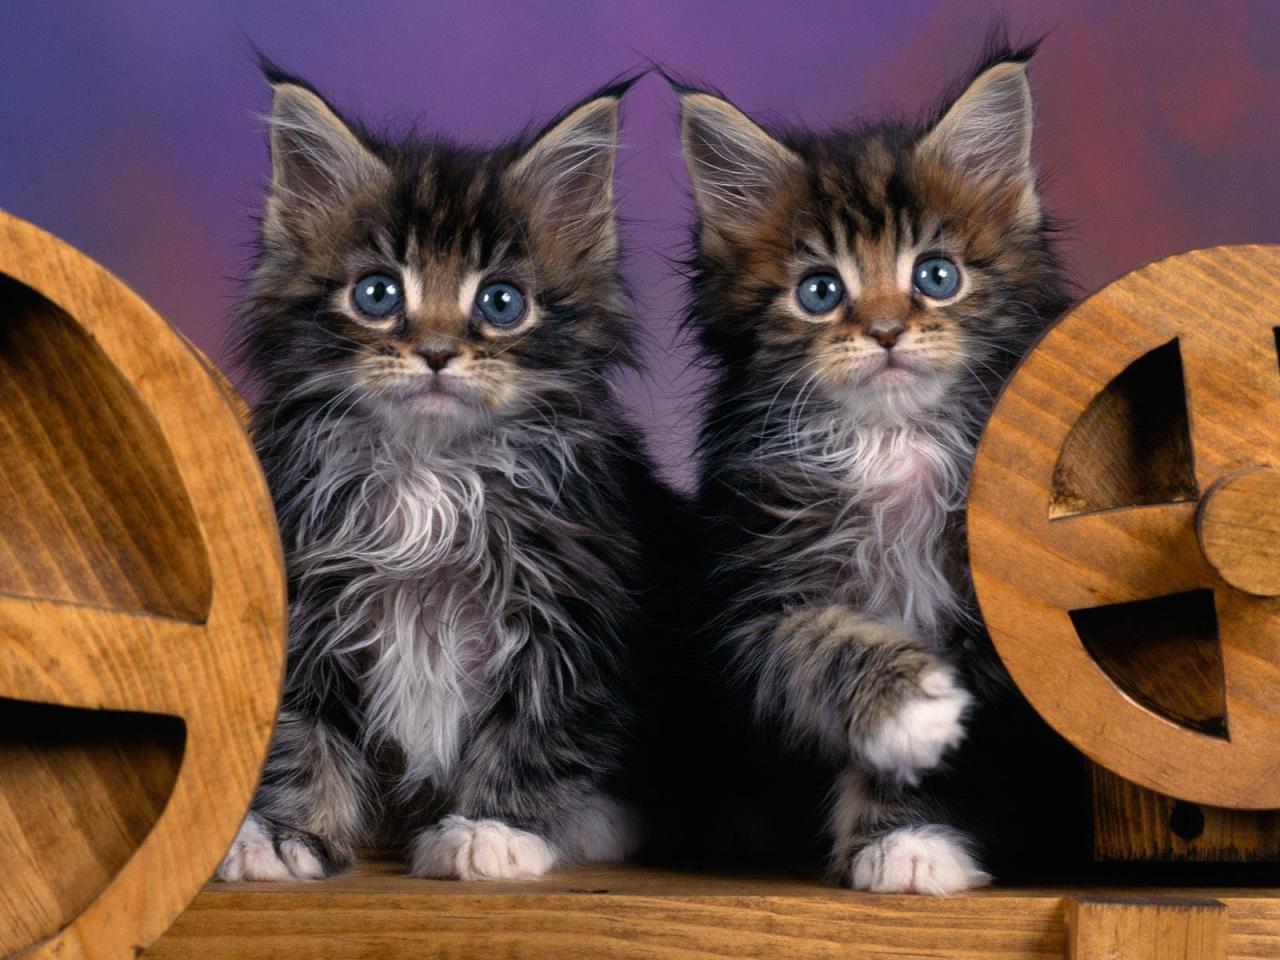 Coon kittens